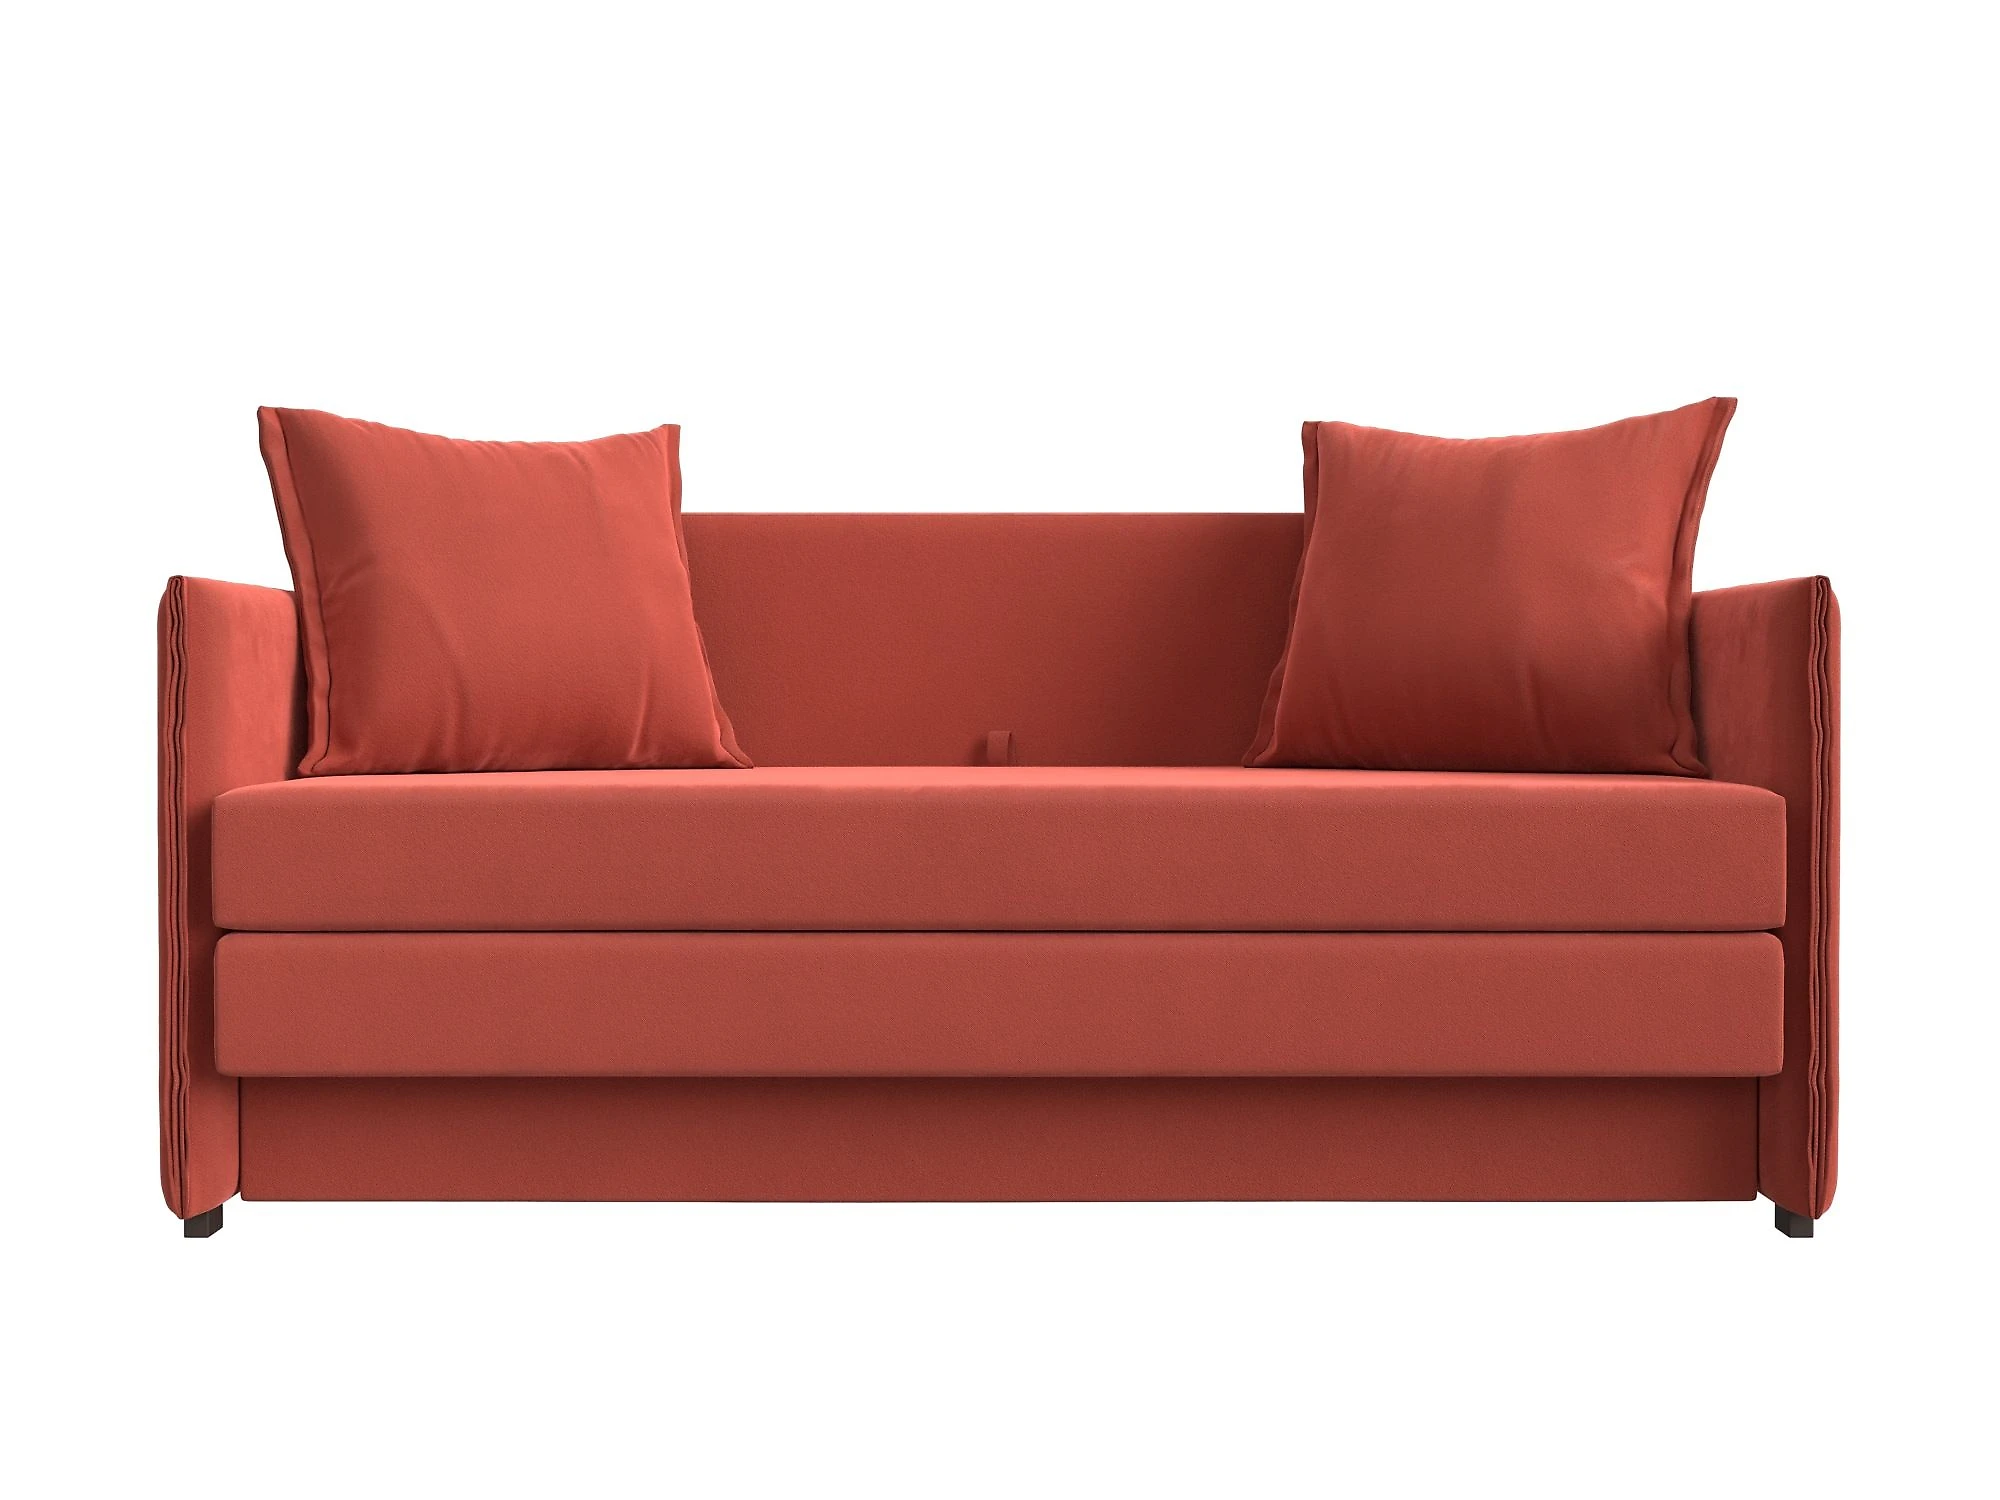 Оранжевый диван аккордеон  Лига-011 Дизайн 5